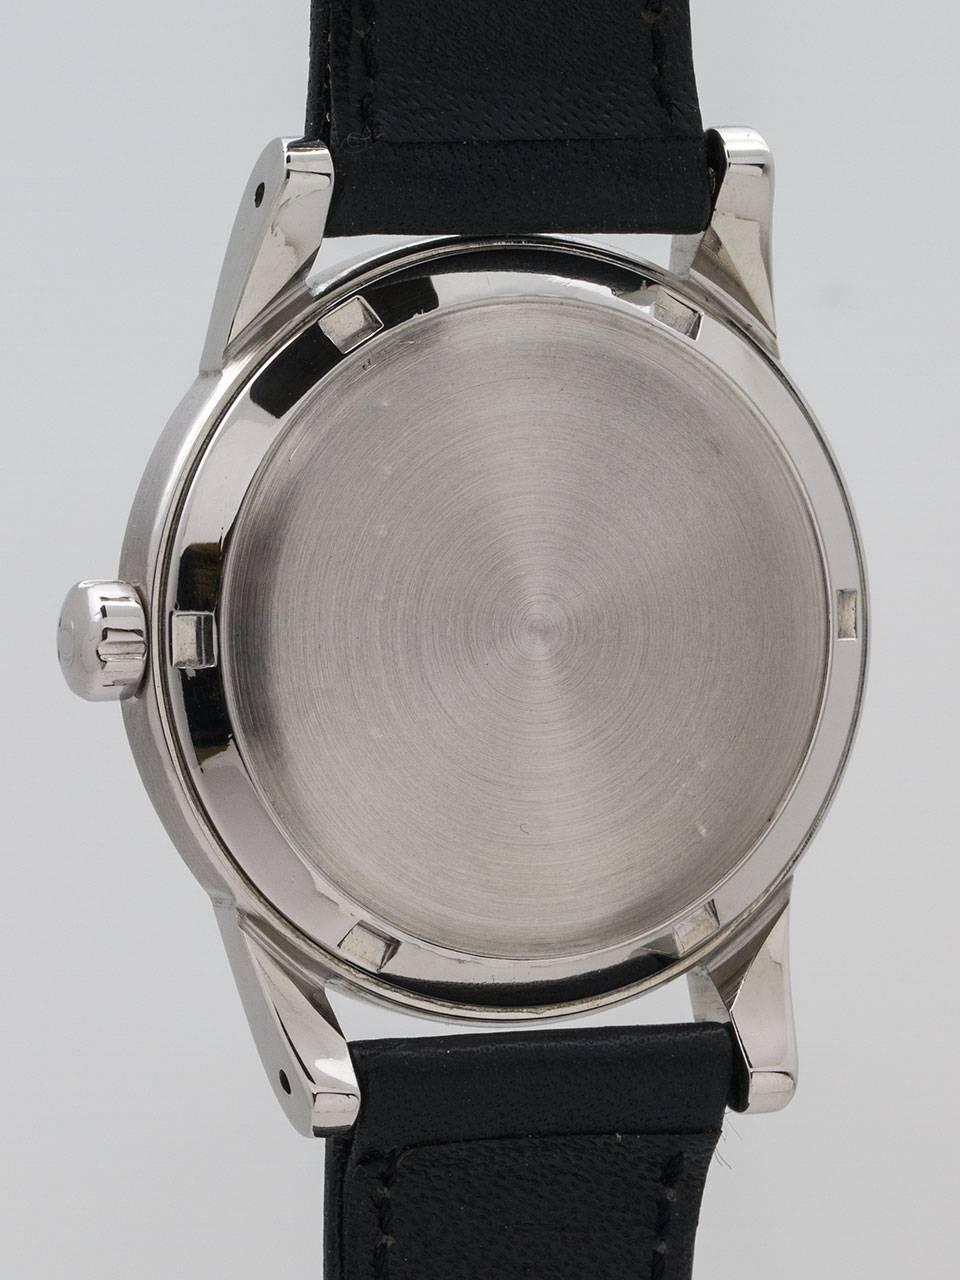 1955 omega watch